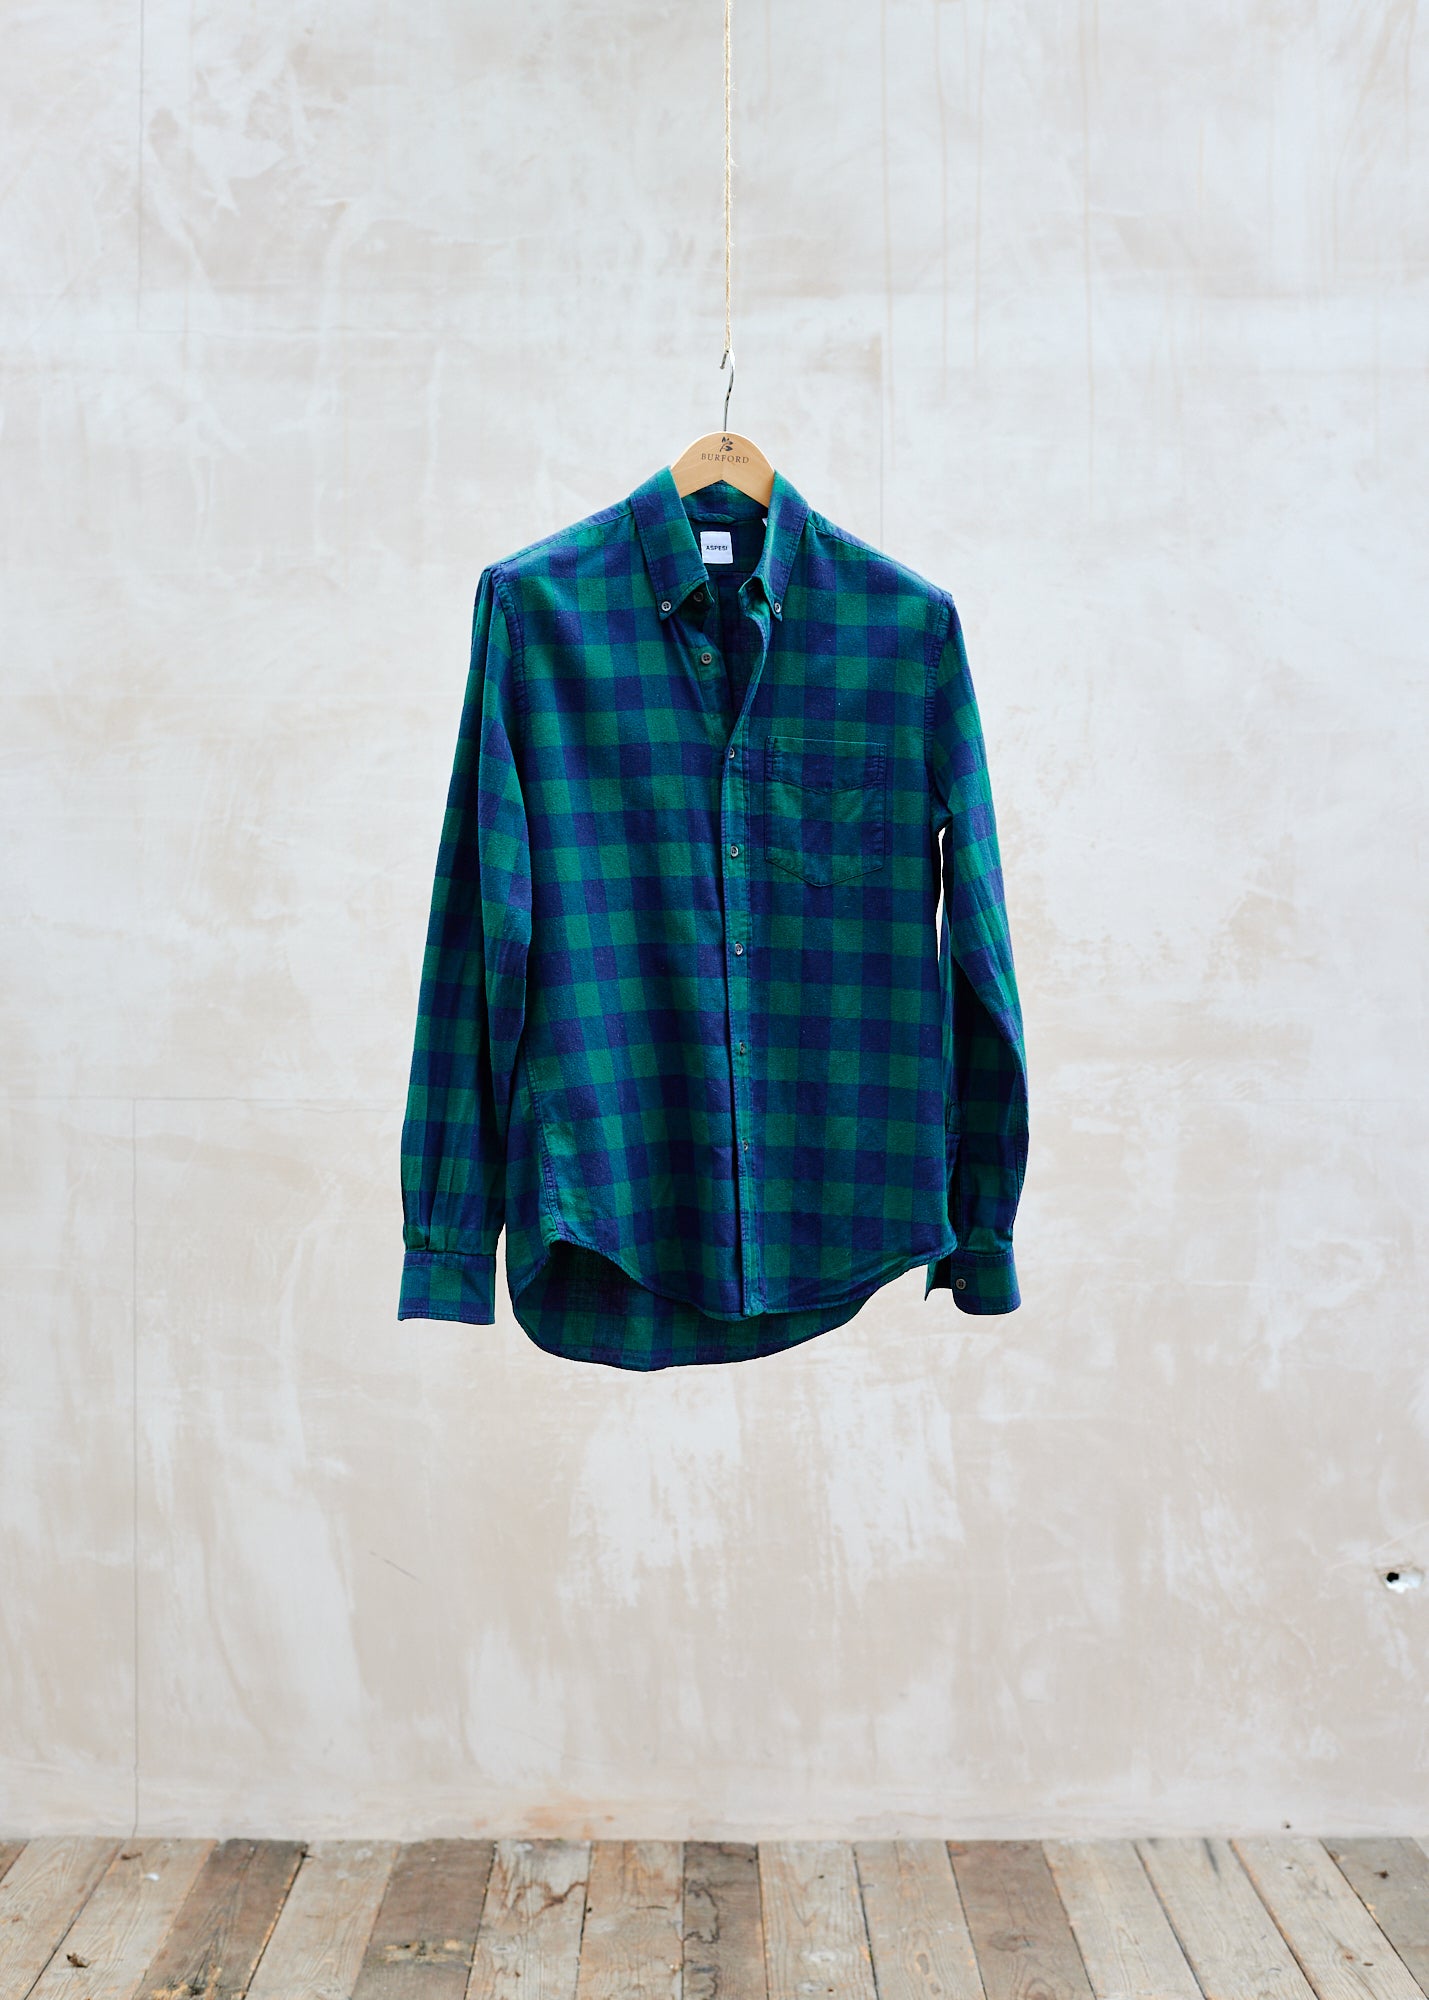 Aspesi Green & Black Checked Cotton Flannel Shirt - M